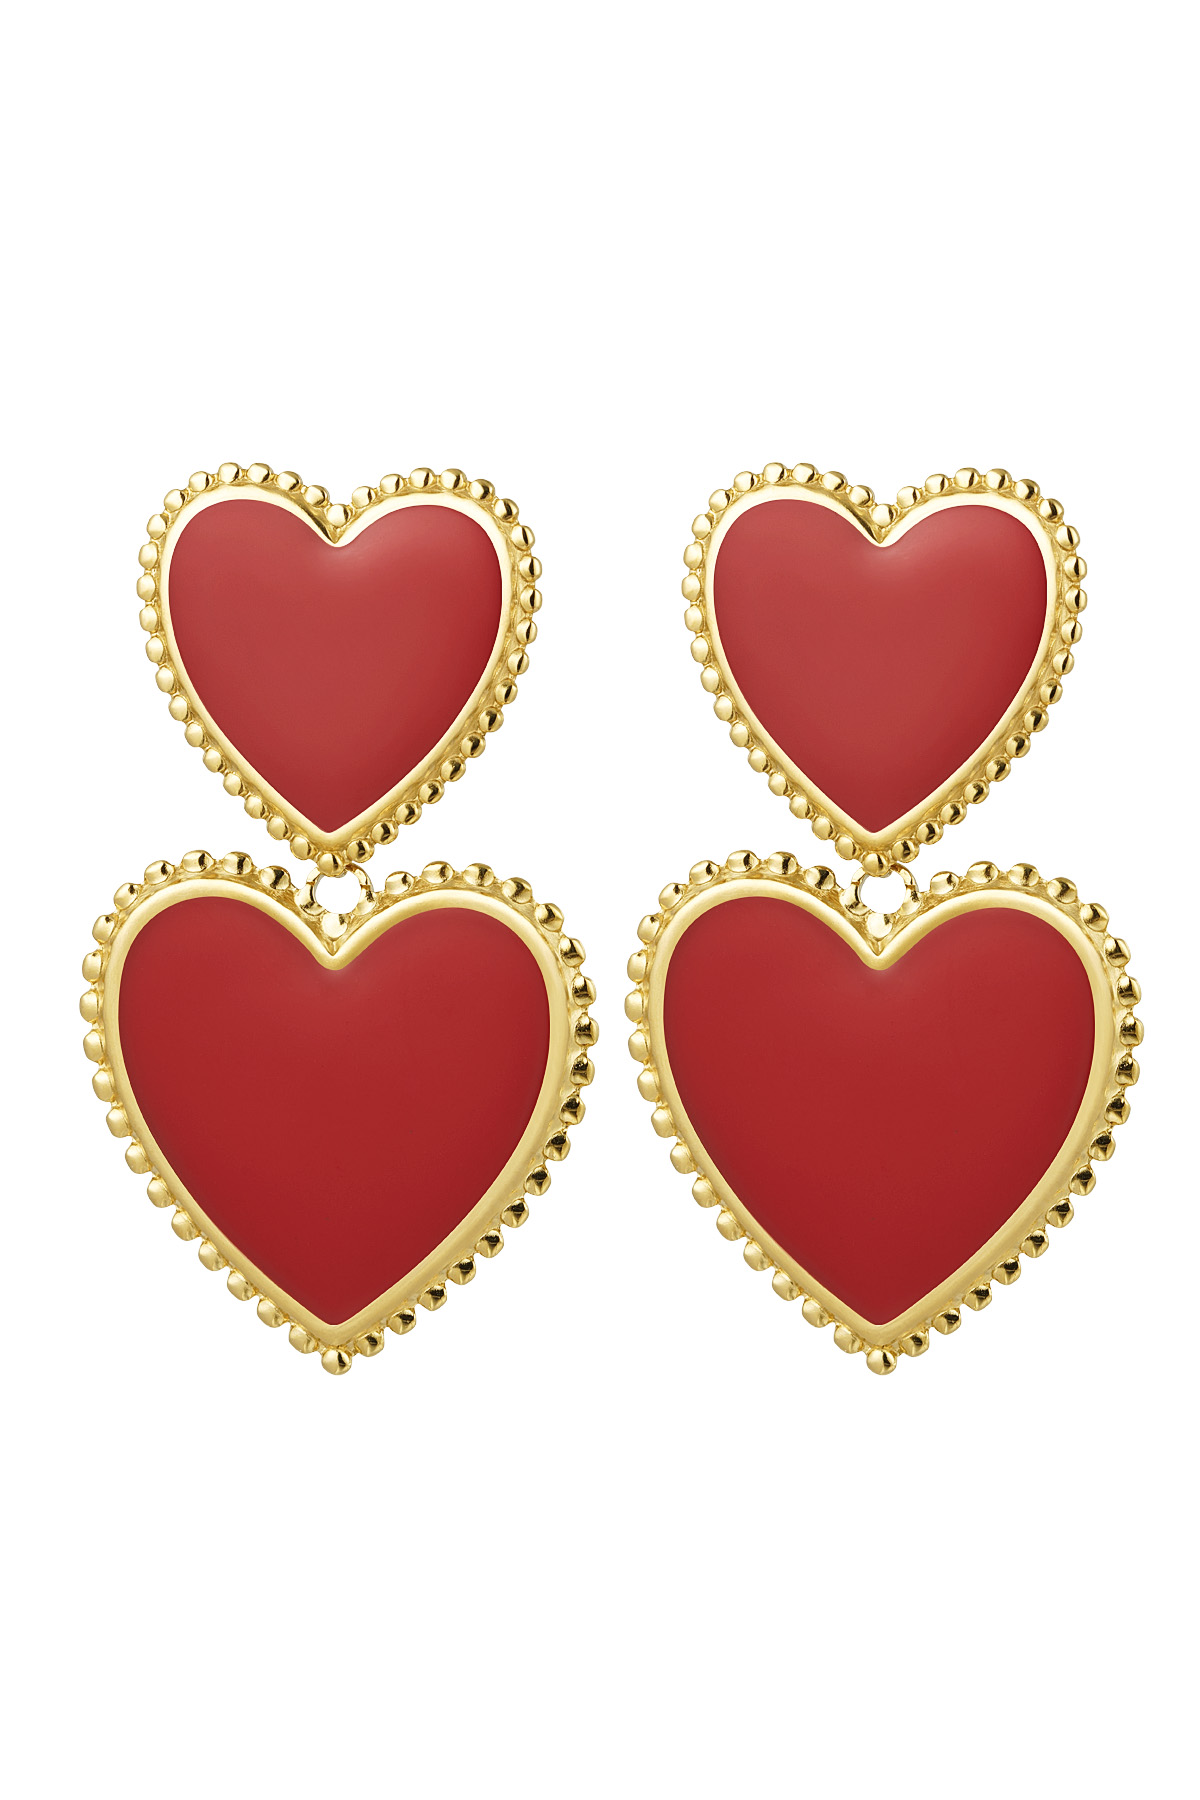 Earrings 2 x heart - red Stainless Steel